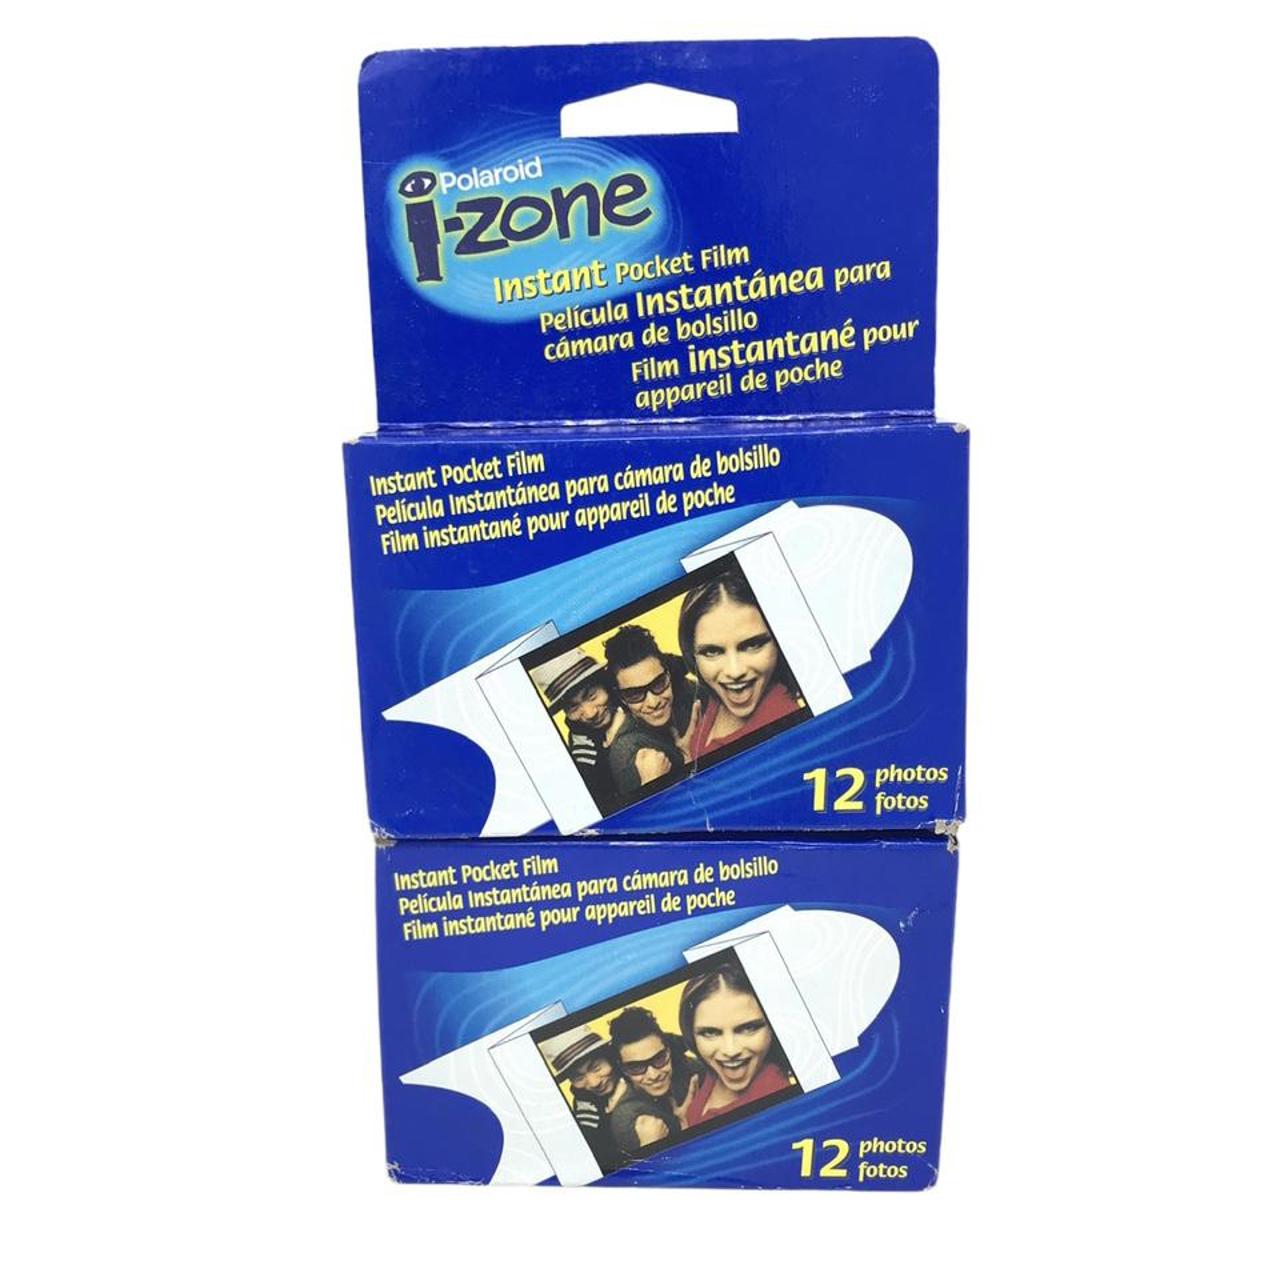 Product Image 3 - Polaroid I-Zone Instant Pocket Film

Two